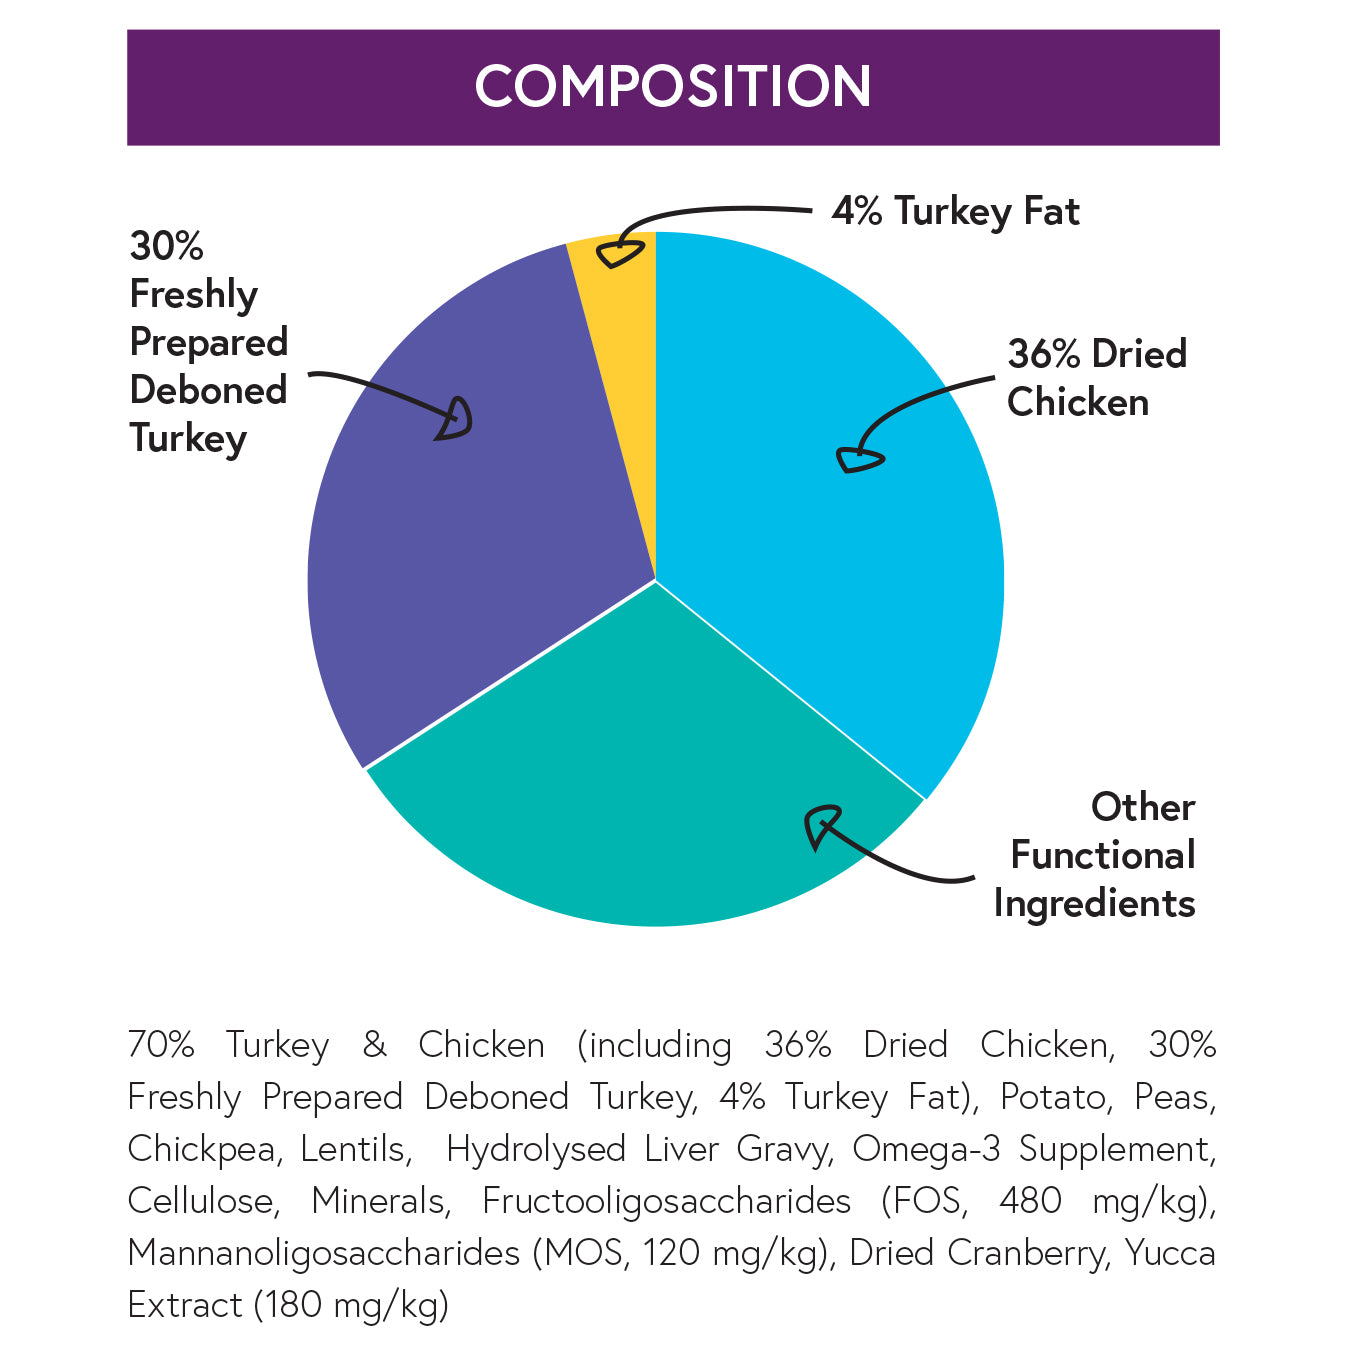 Natural Choice Pet Foods Connoisseur Cat - Kitten Turkey & Chicken